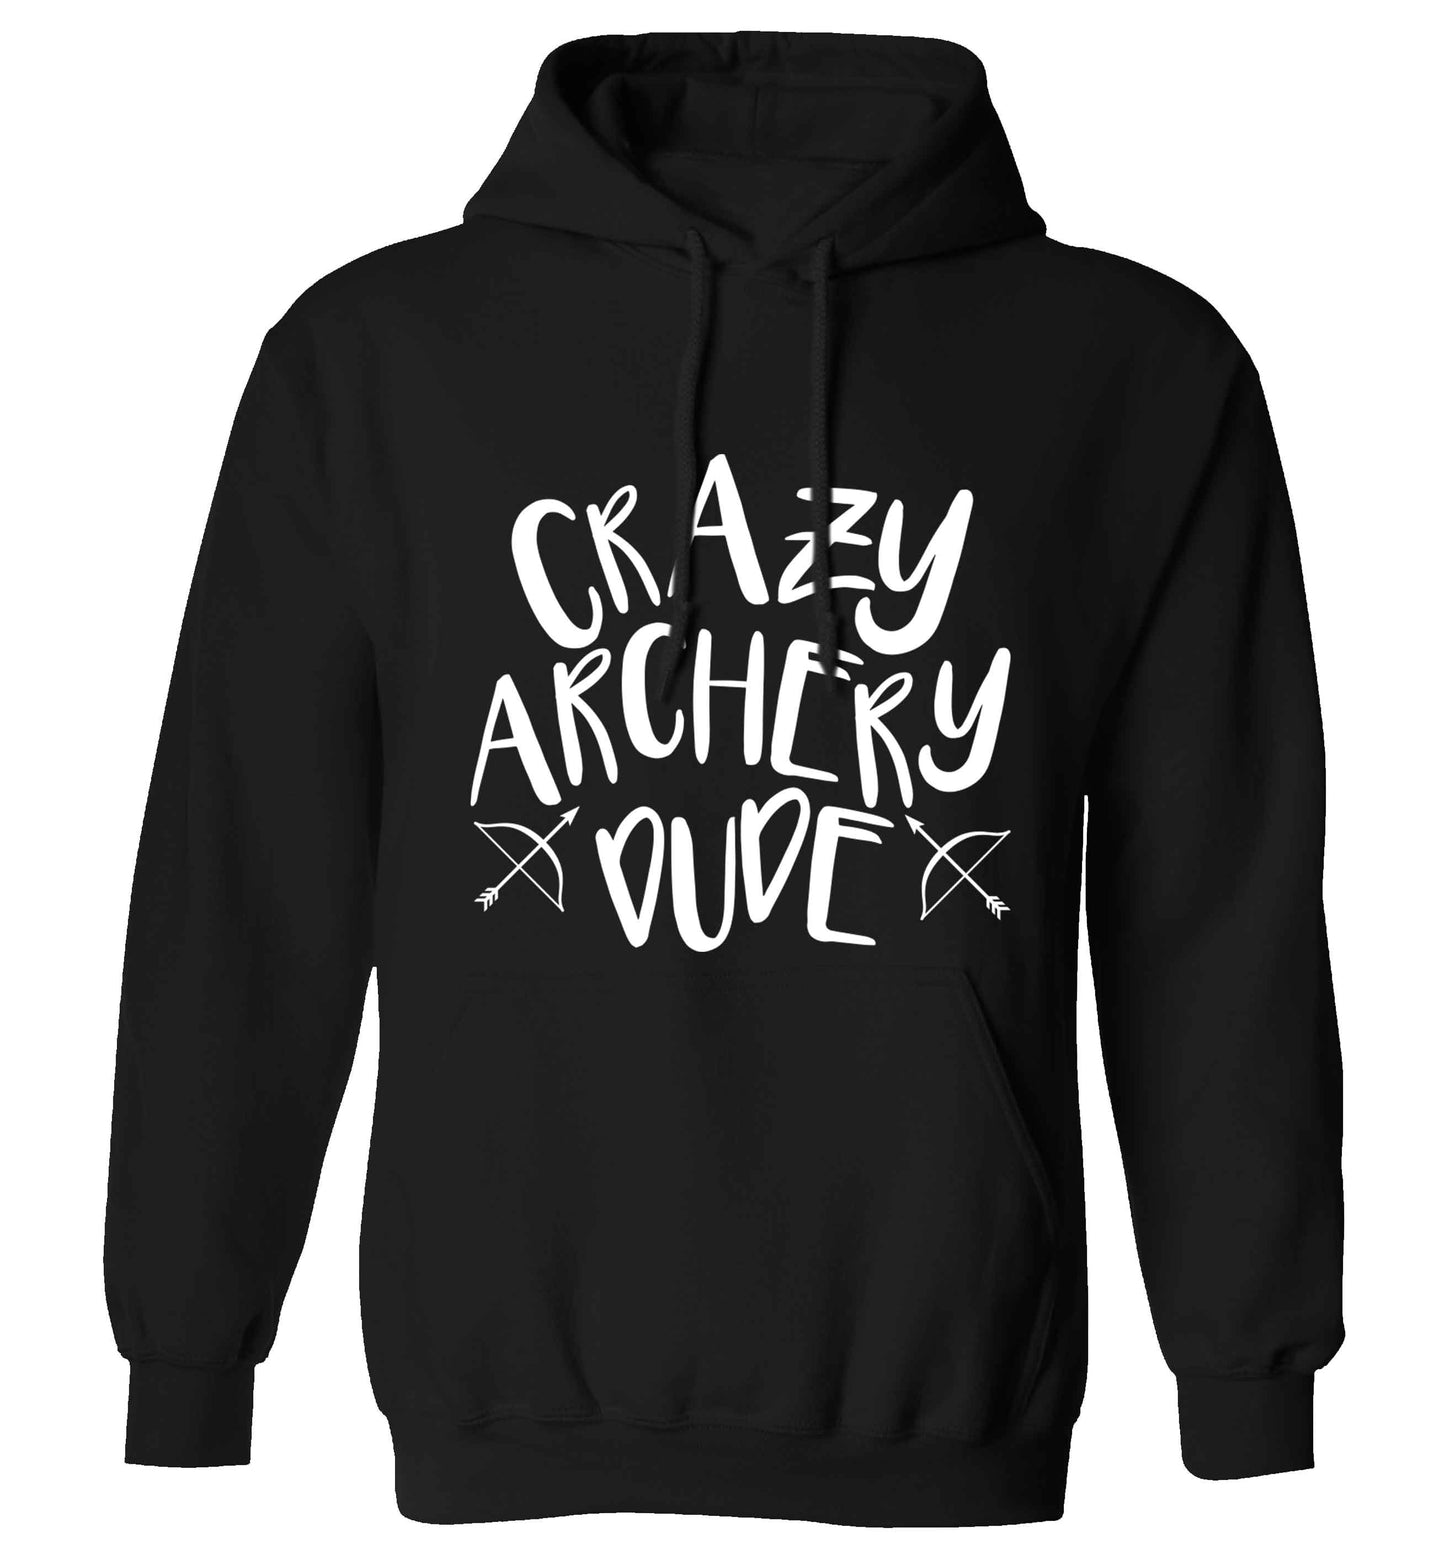 Crazy archery dude adults unisex black hoodie 2XL